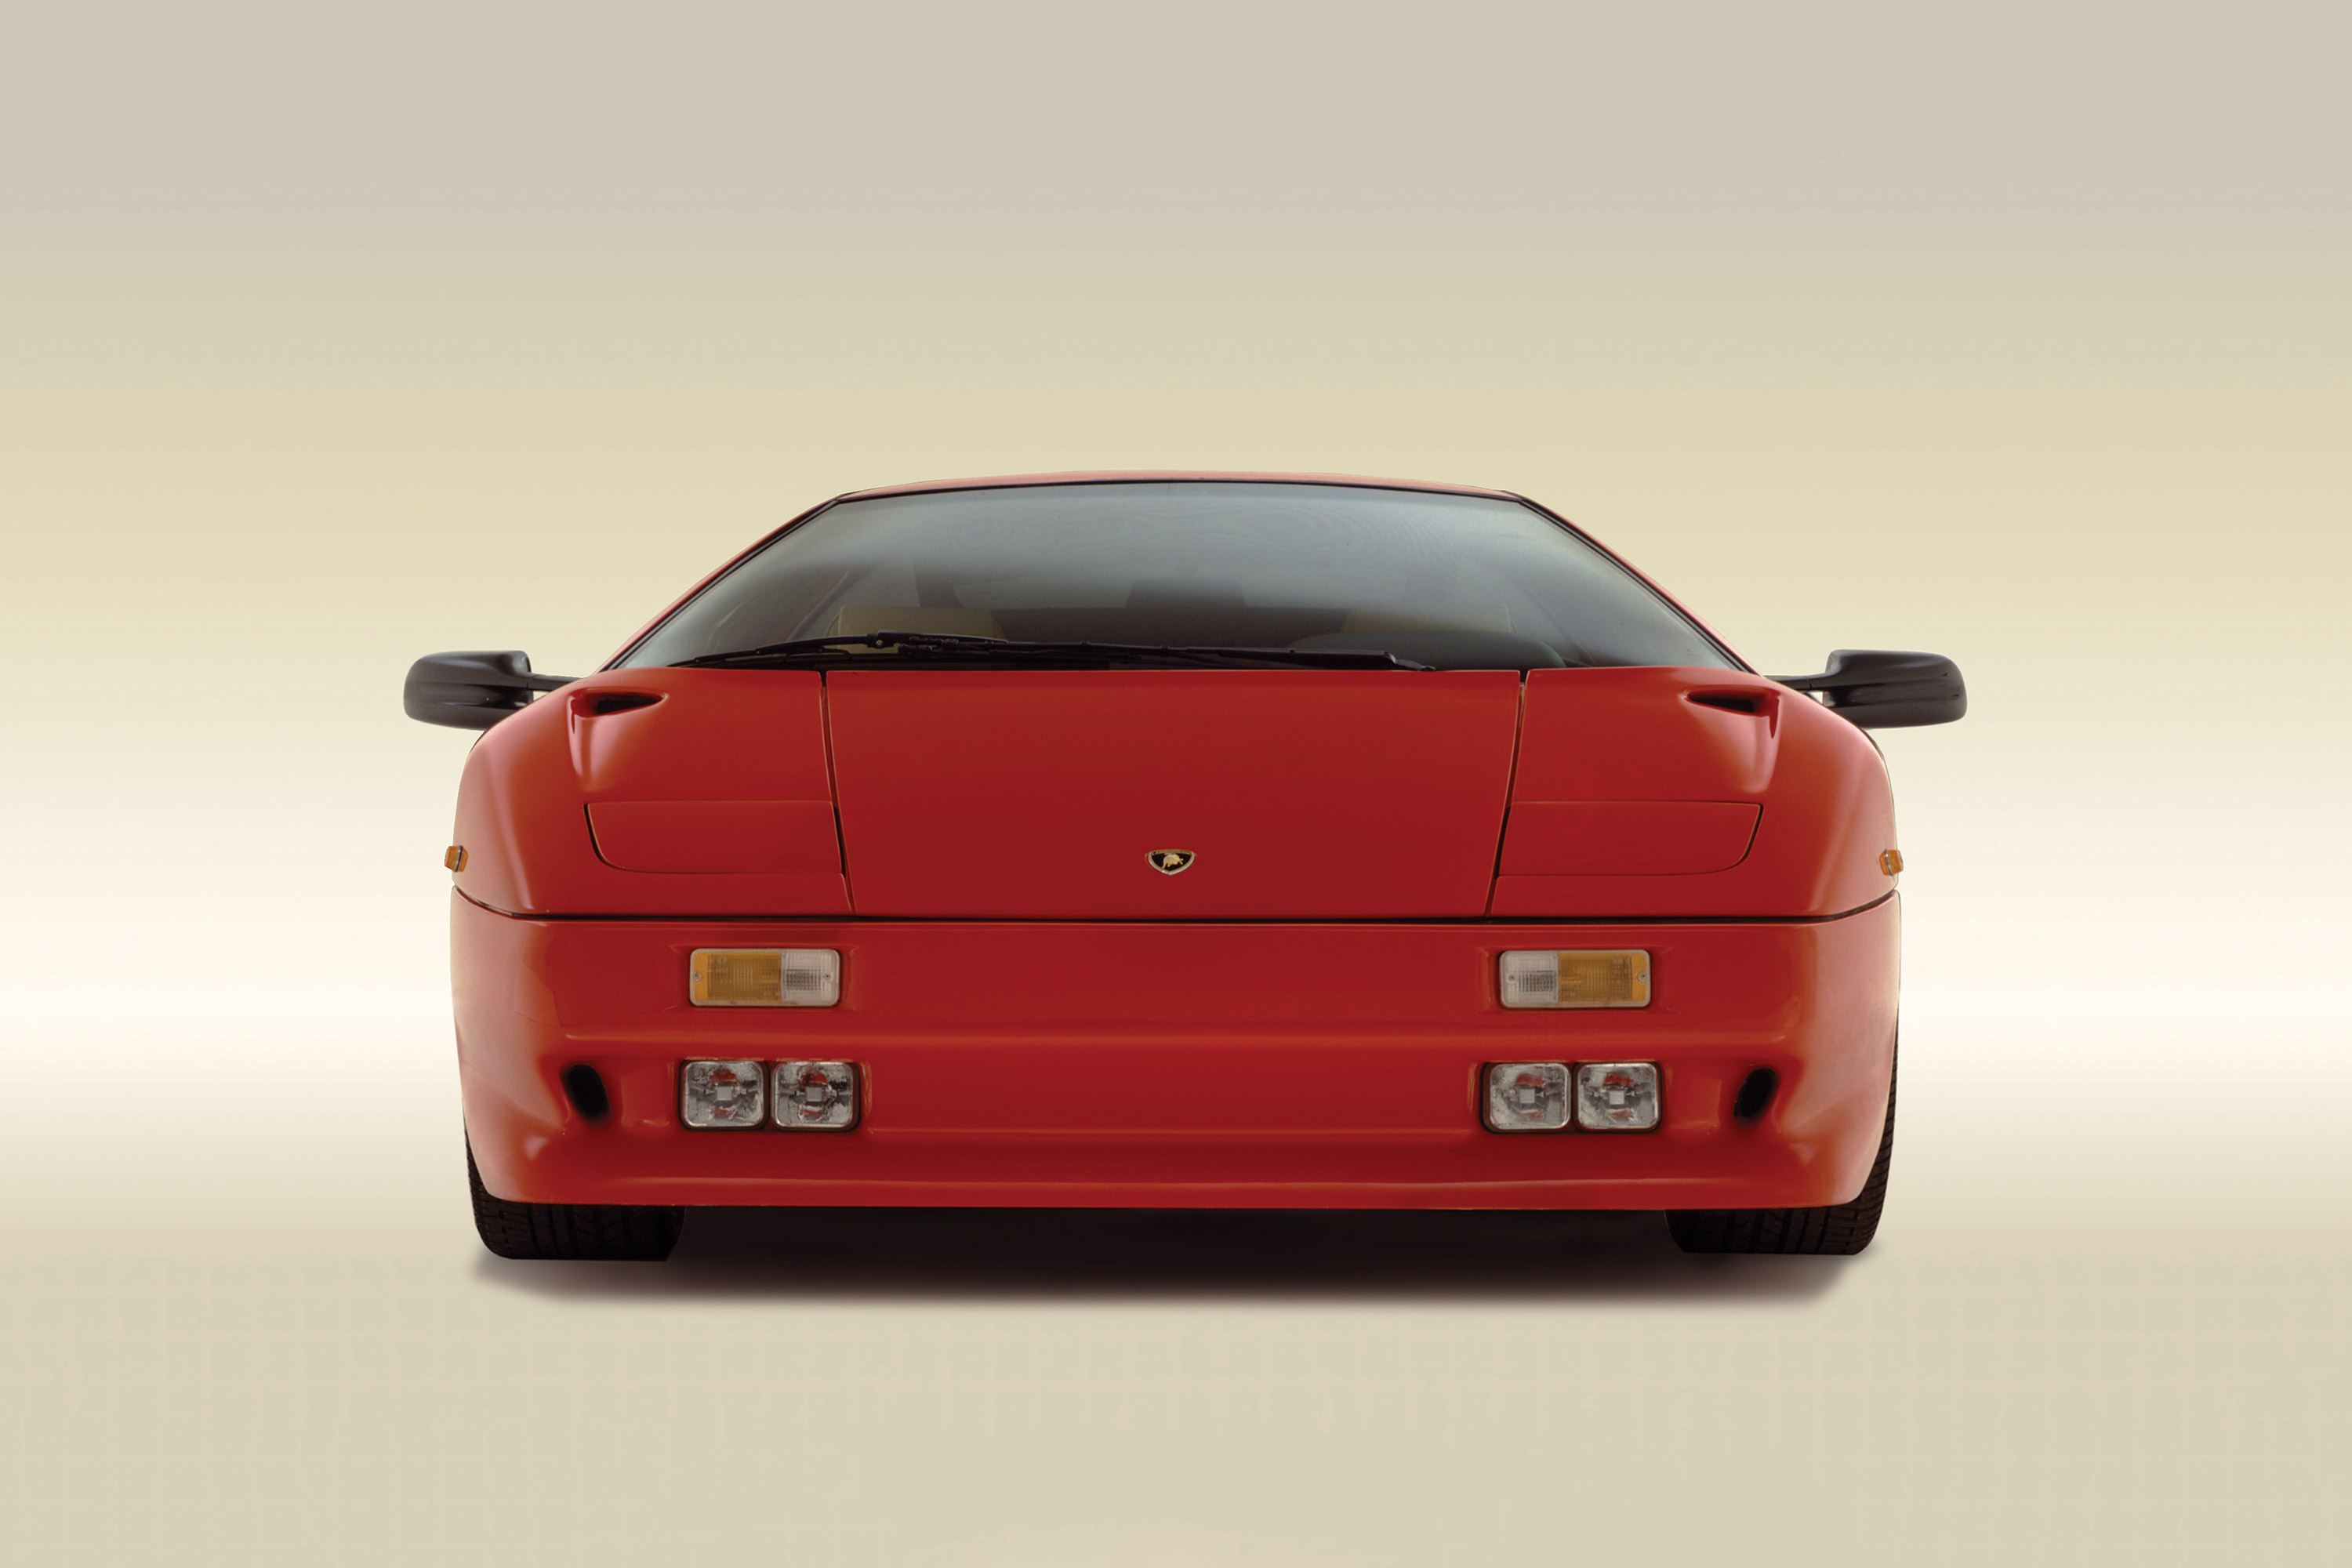  1990 Lamborghini Diablo Wallpaper.